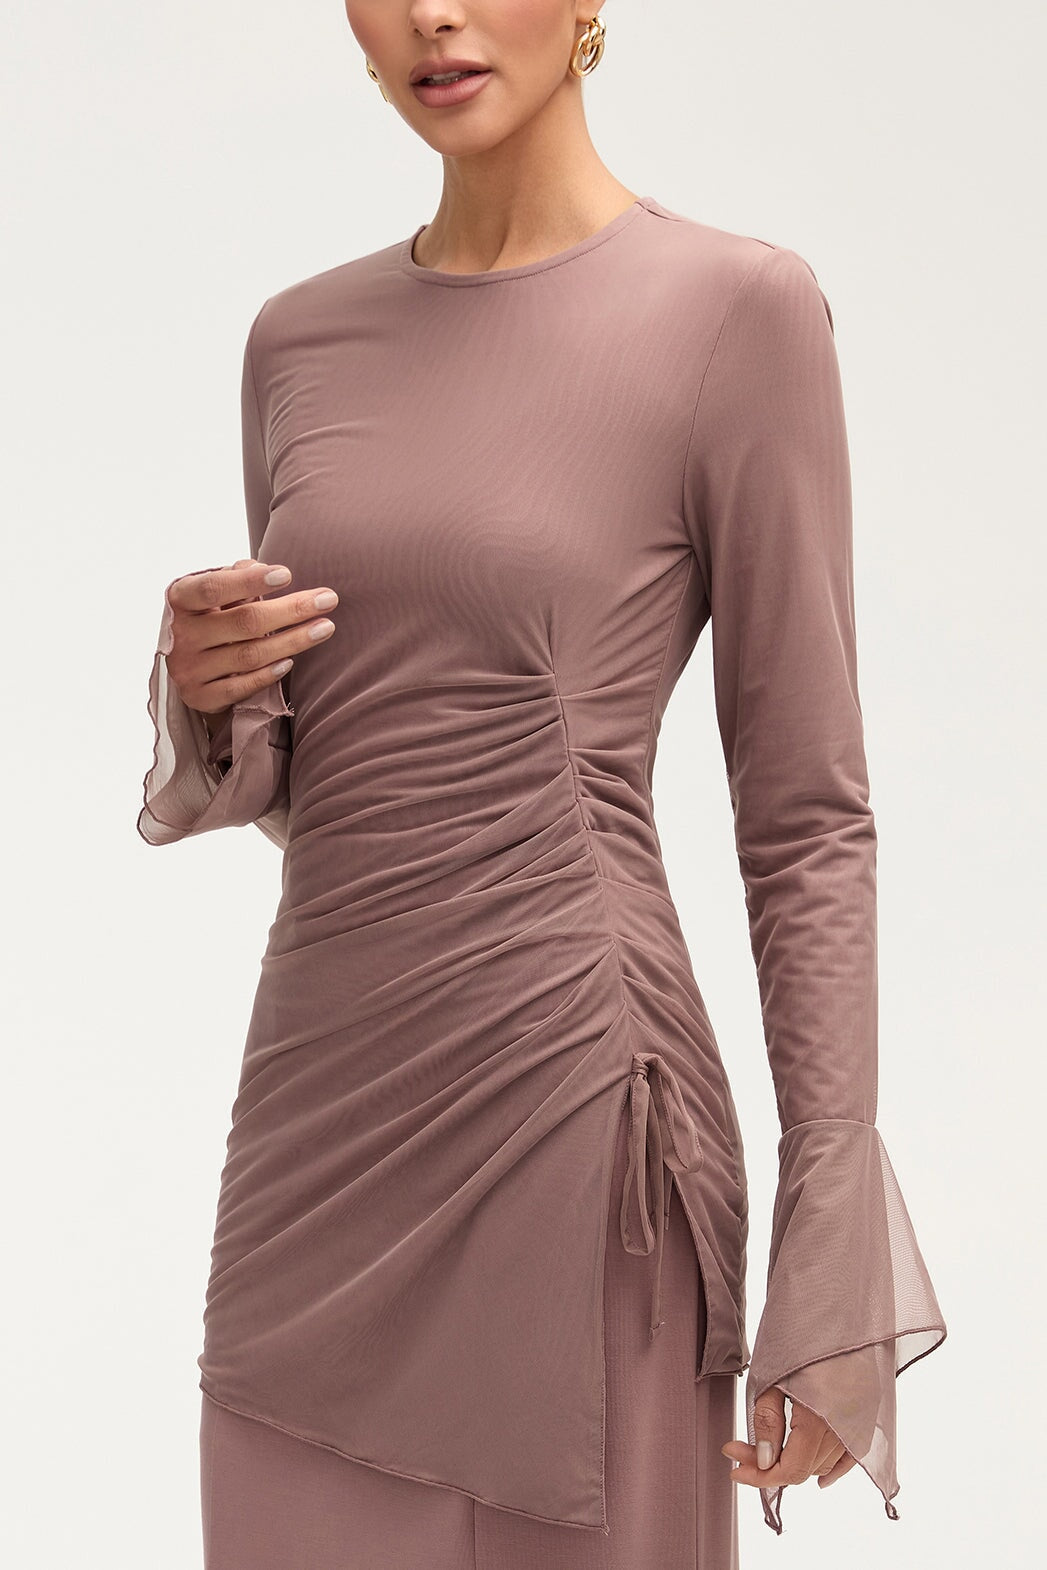 Monica Side Slit Mesh Top - Twilight Mauve Clothing Veiled 